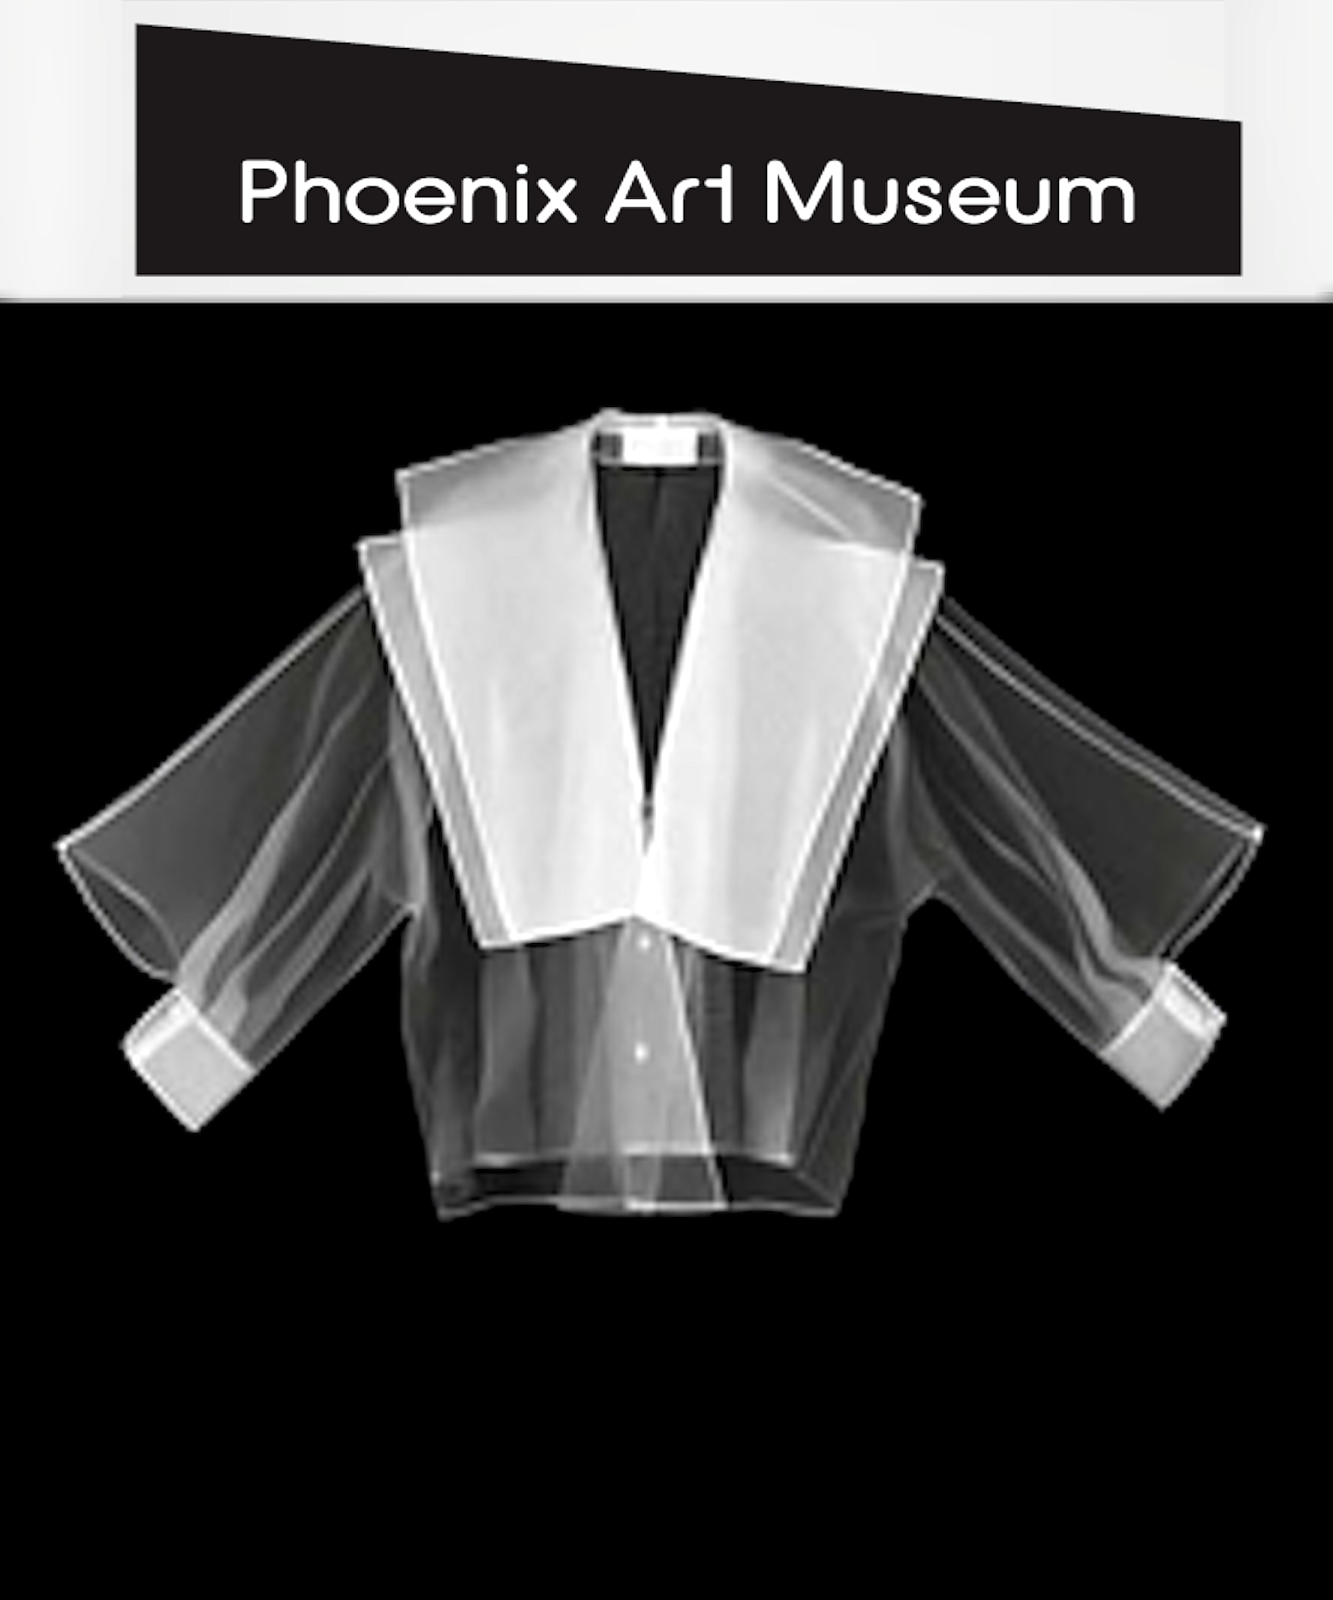 The Phoenix ART Museum